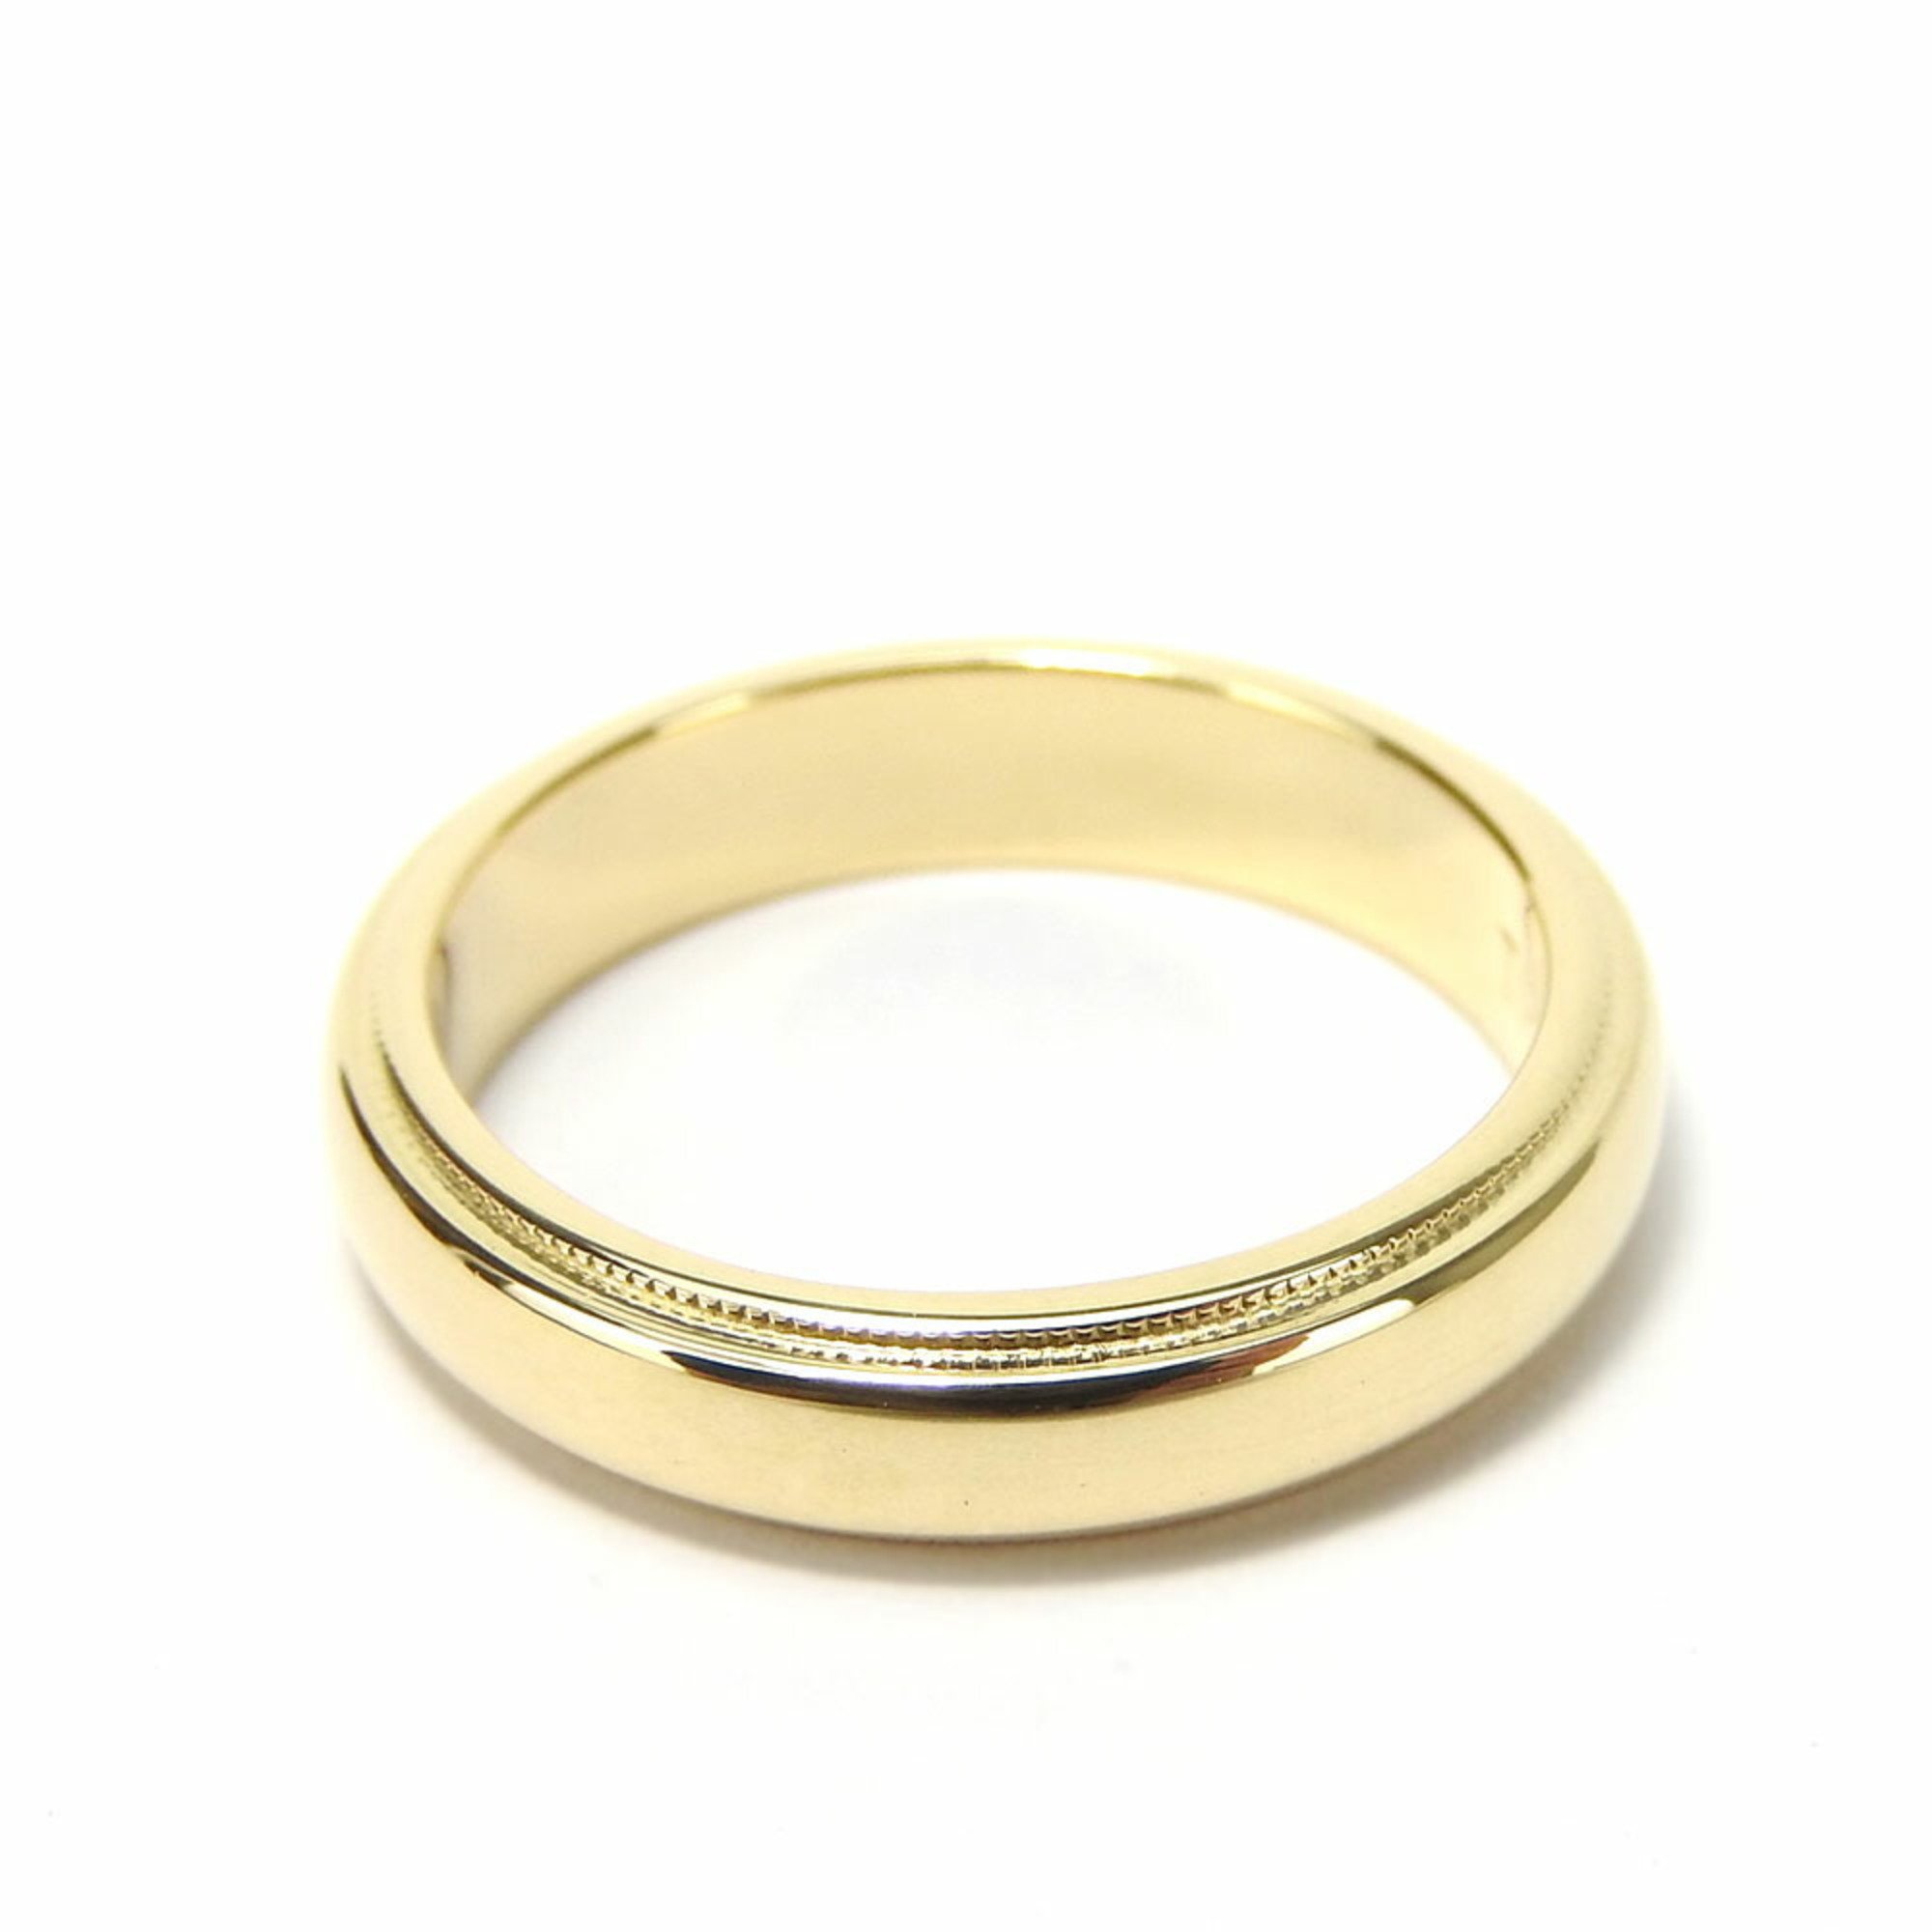 Tiffany & Co. Ring, Milgrain, K18YG, approx. 4.7g, Yellow Gold, Women's, TIFFANY